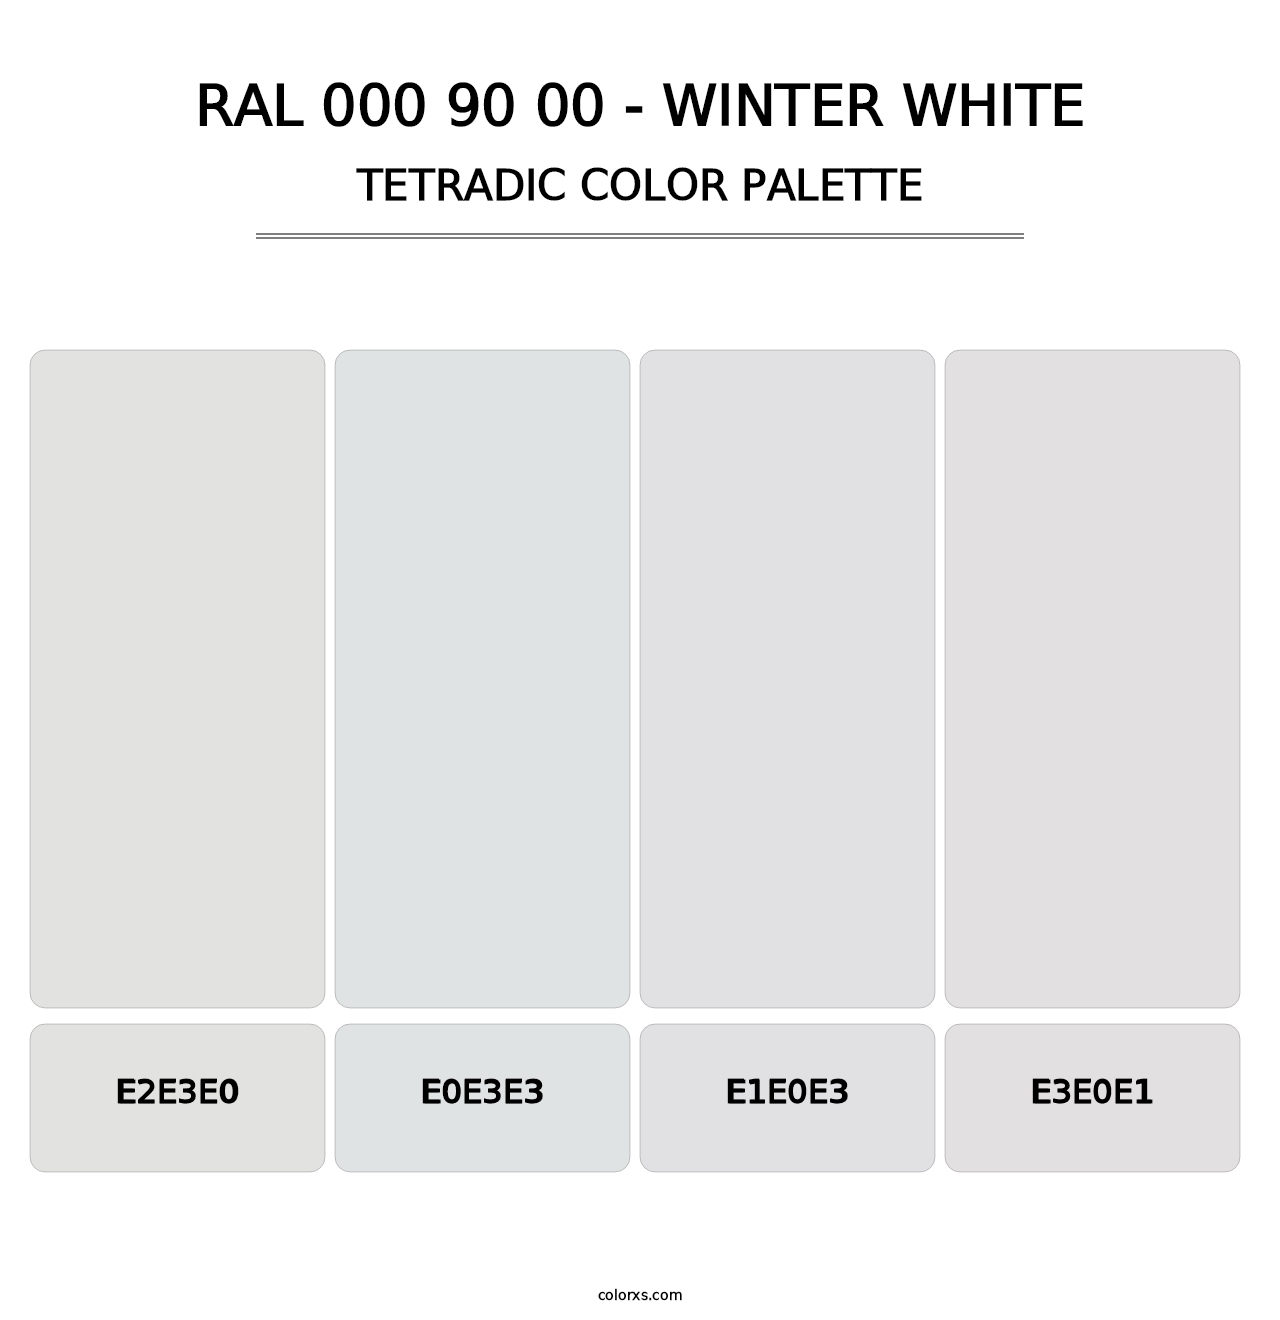 RAL 000 90 00 - Winter White - Tetradic Color Palette